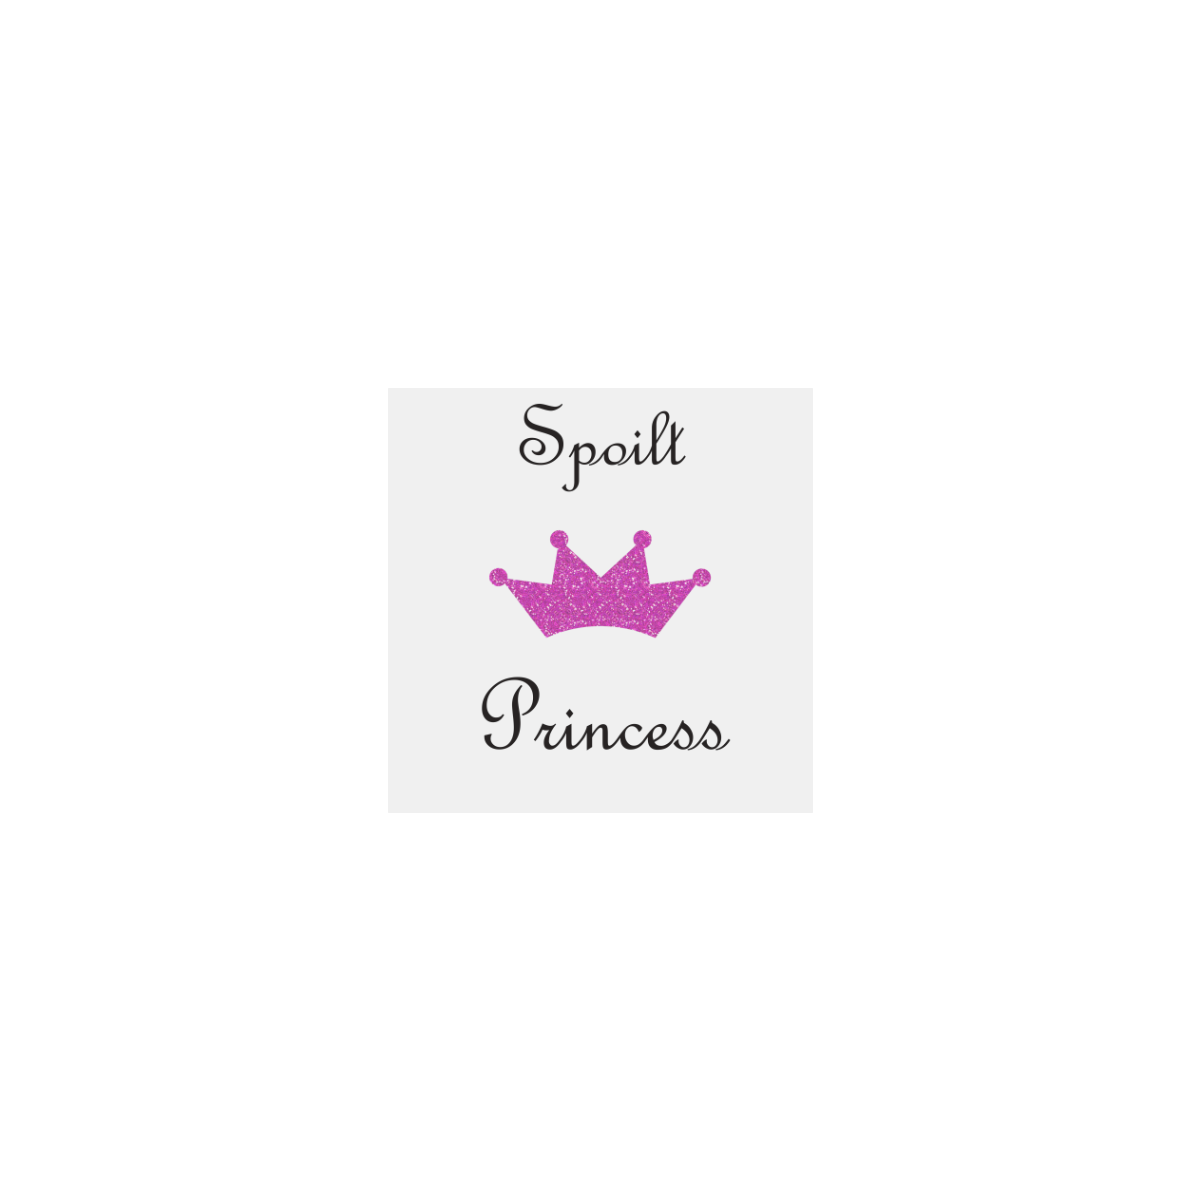 Spoil Princess Personalized Temporary Tattoo (15 Pieces)